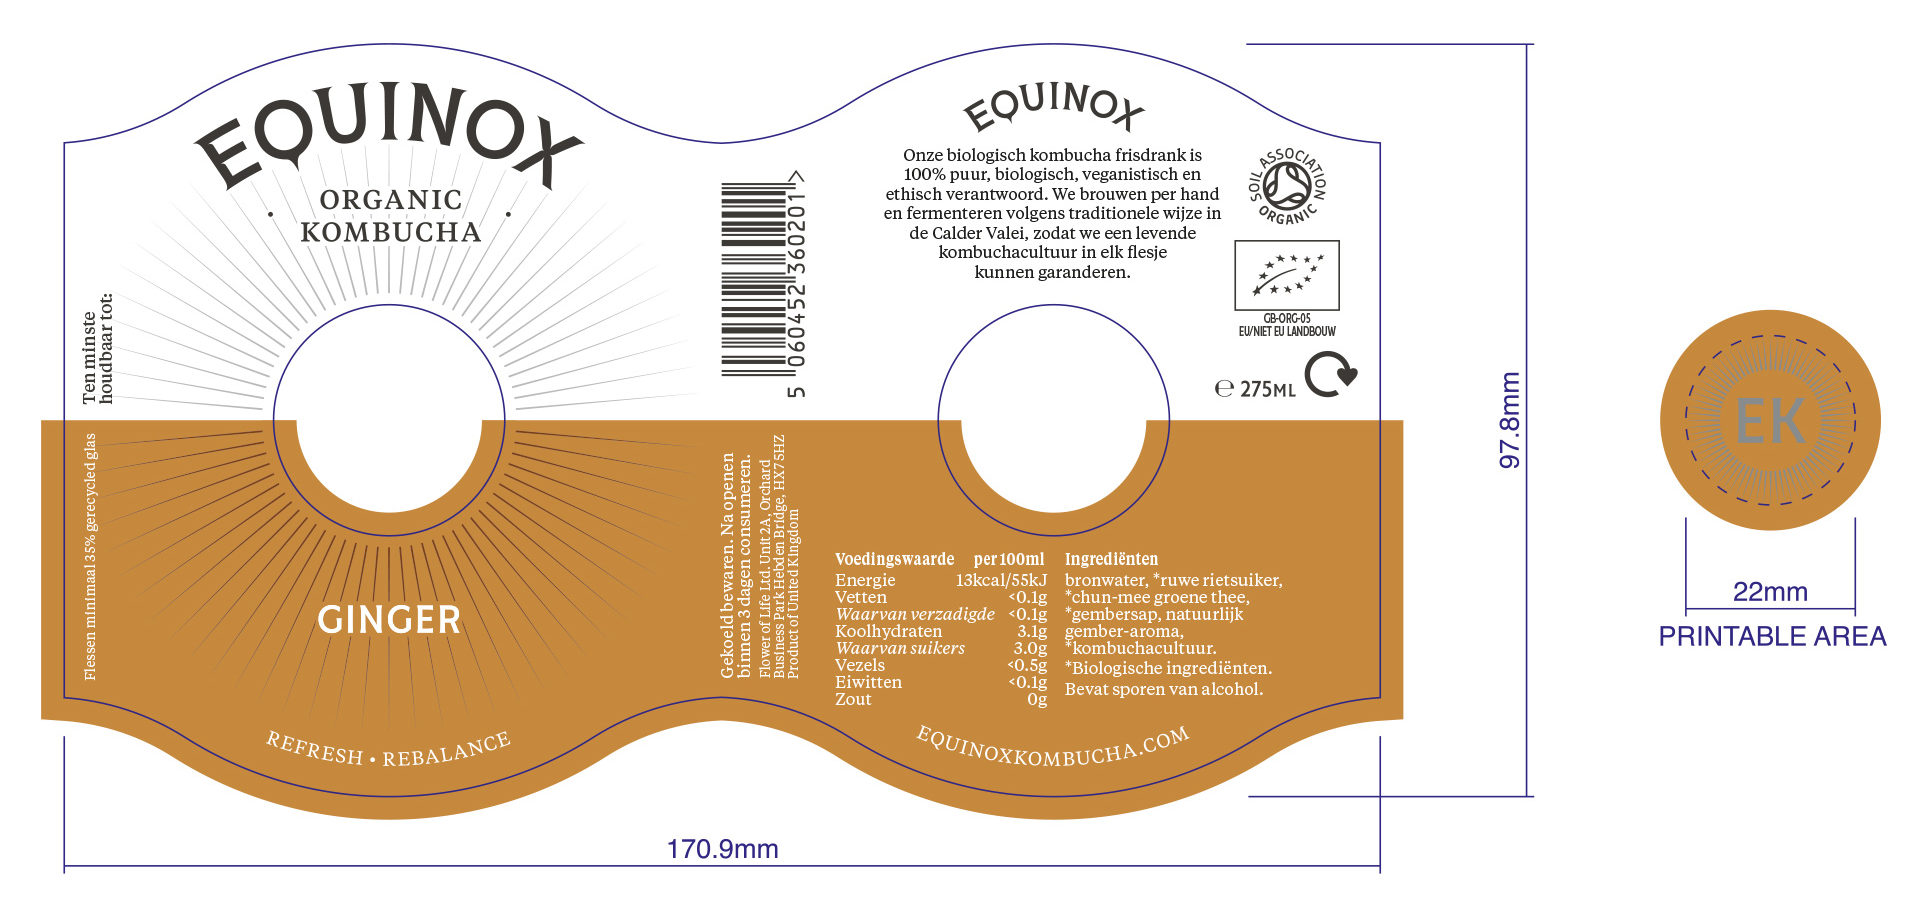 packaging-artwork-repro-drink-bottle-equinox